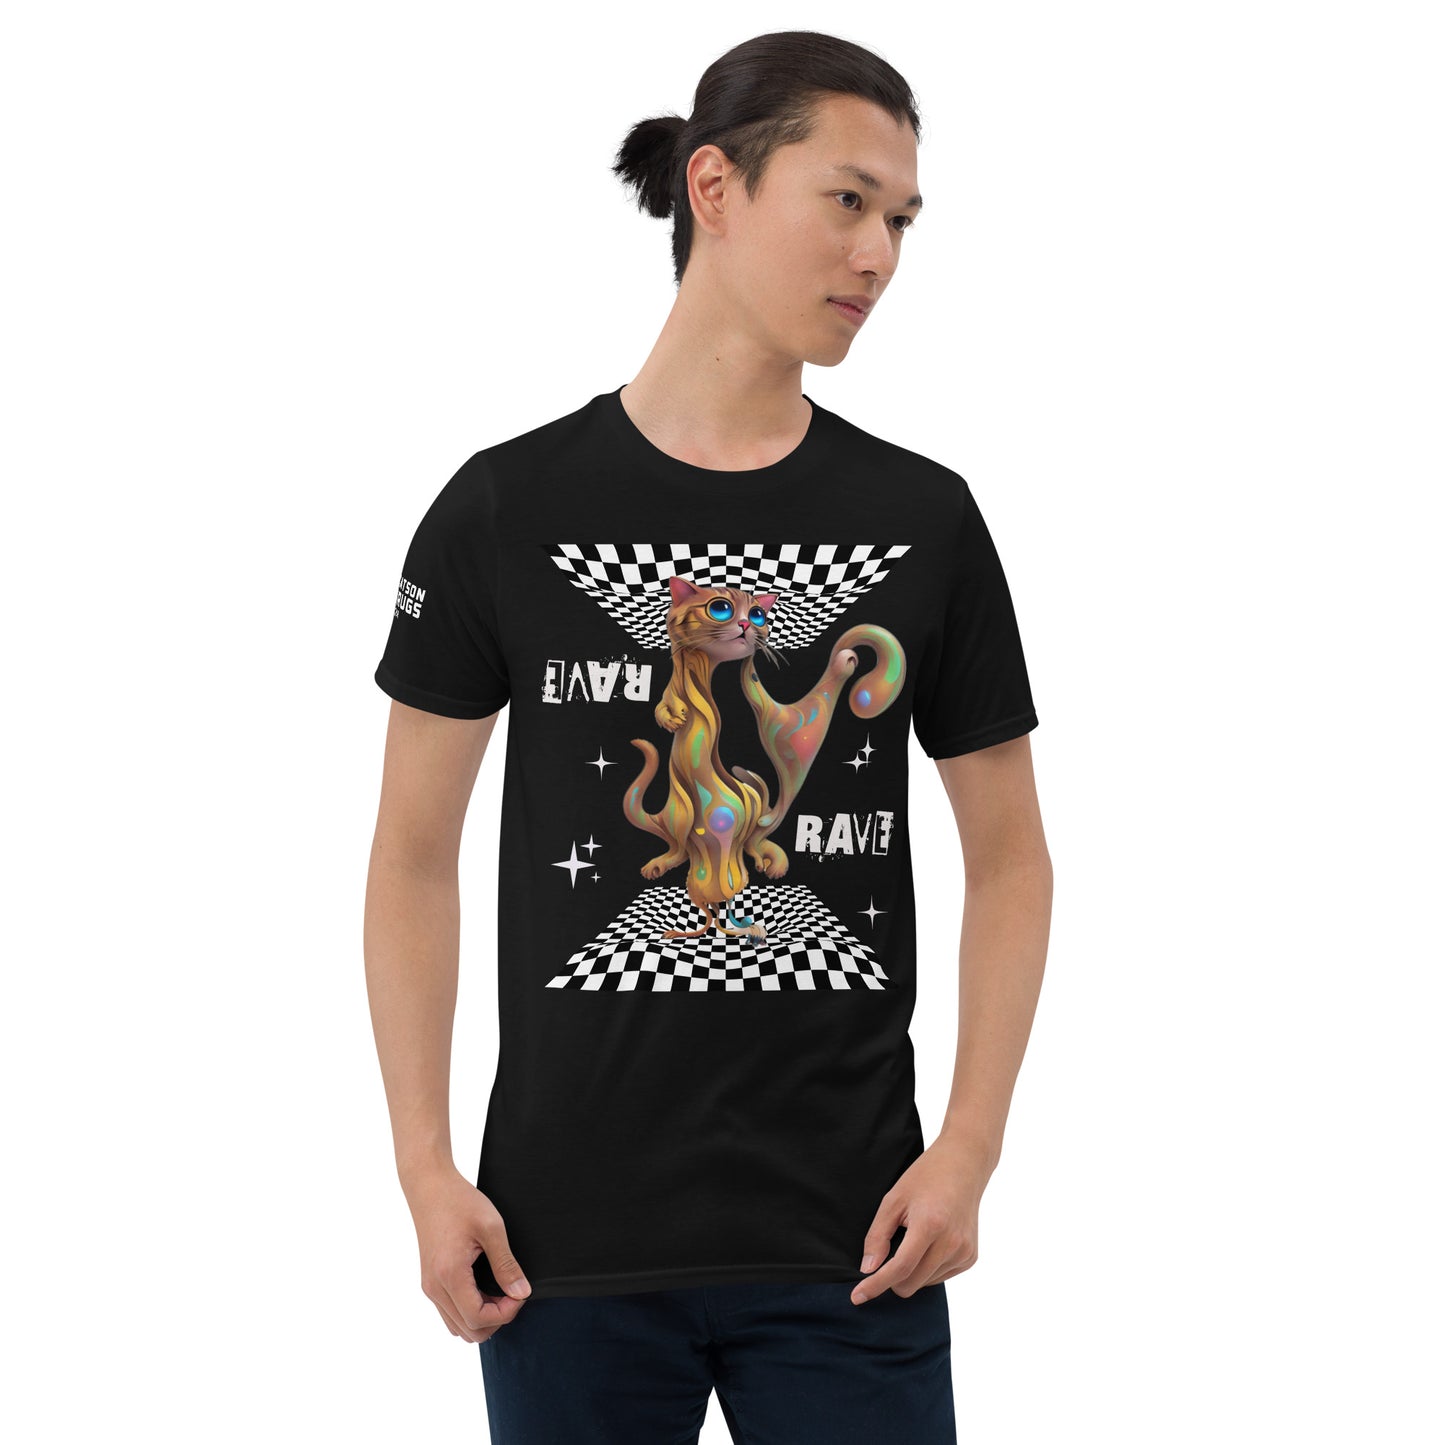 Rave Cat - Unisex T-Shirt, Ecstasy Edition